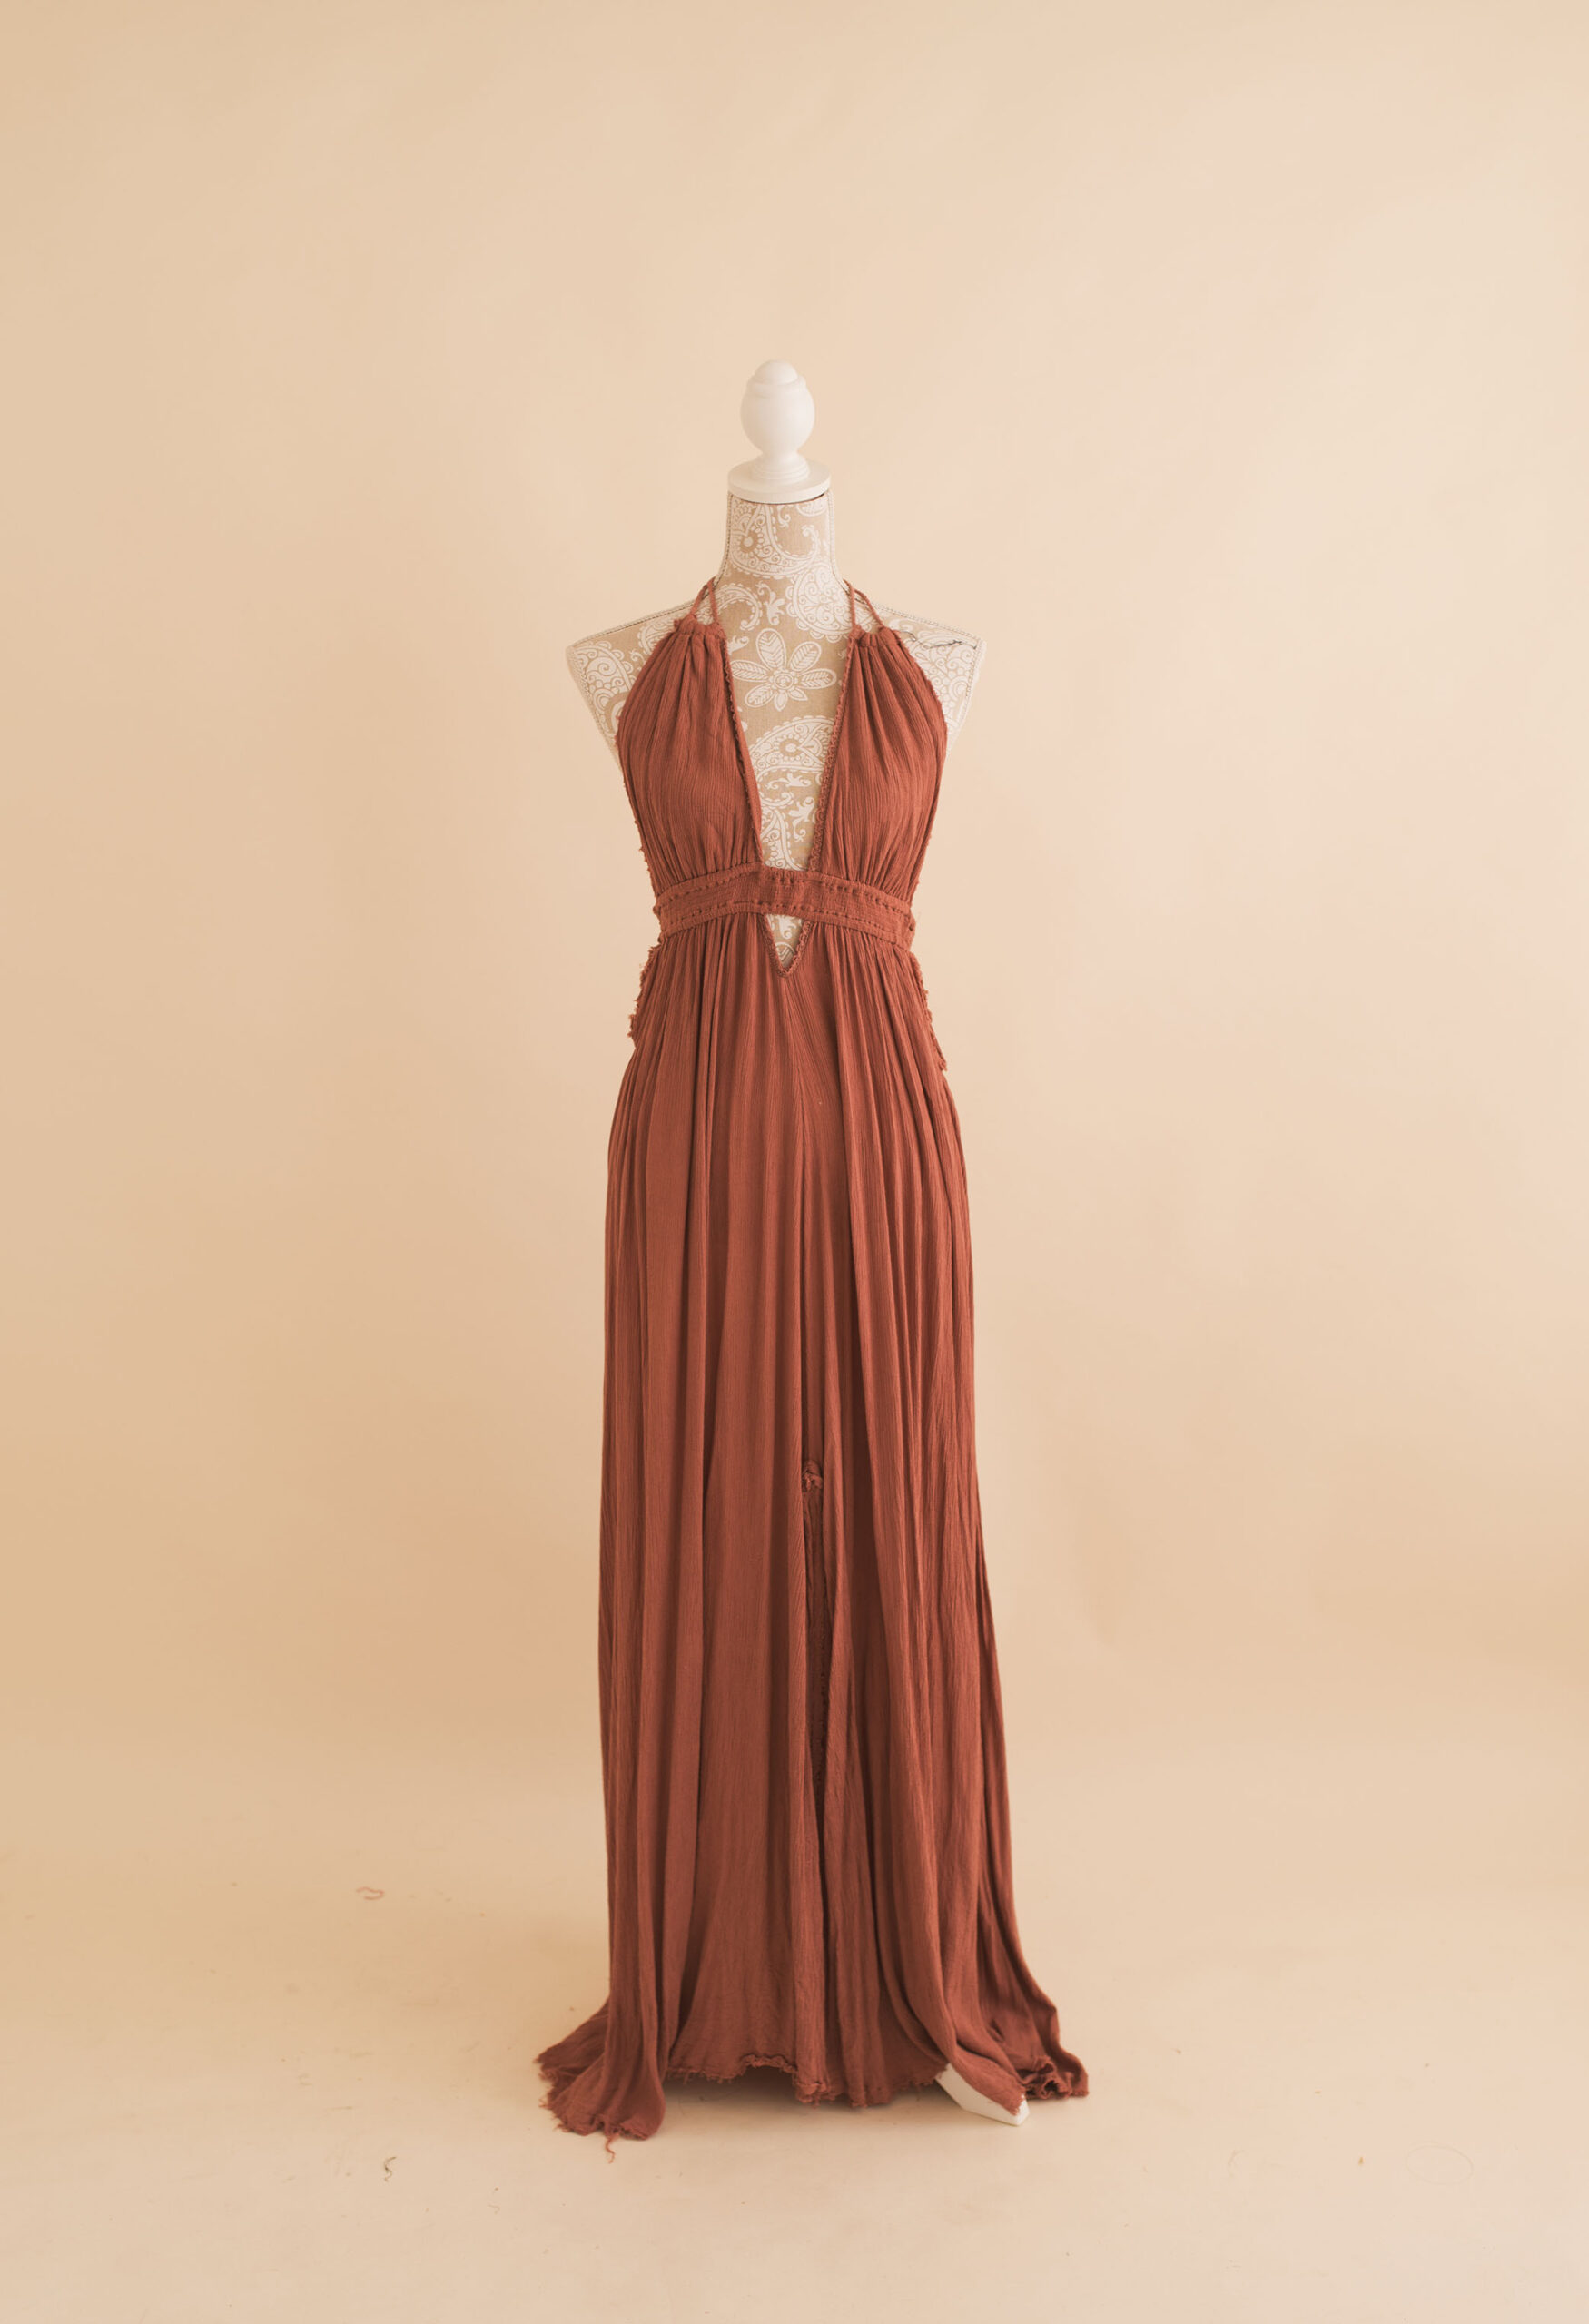 rust maxi dress available in studio wardrobe